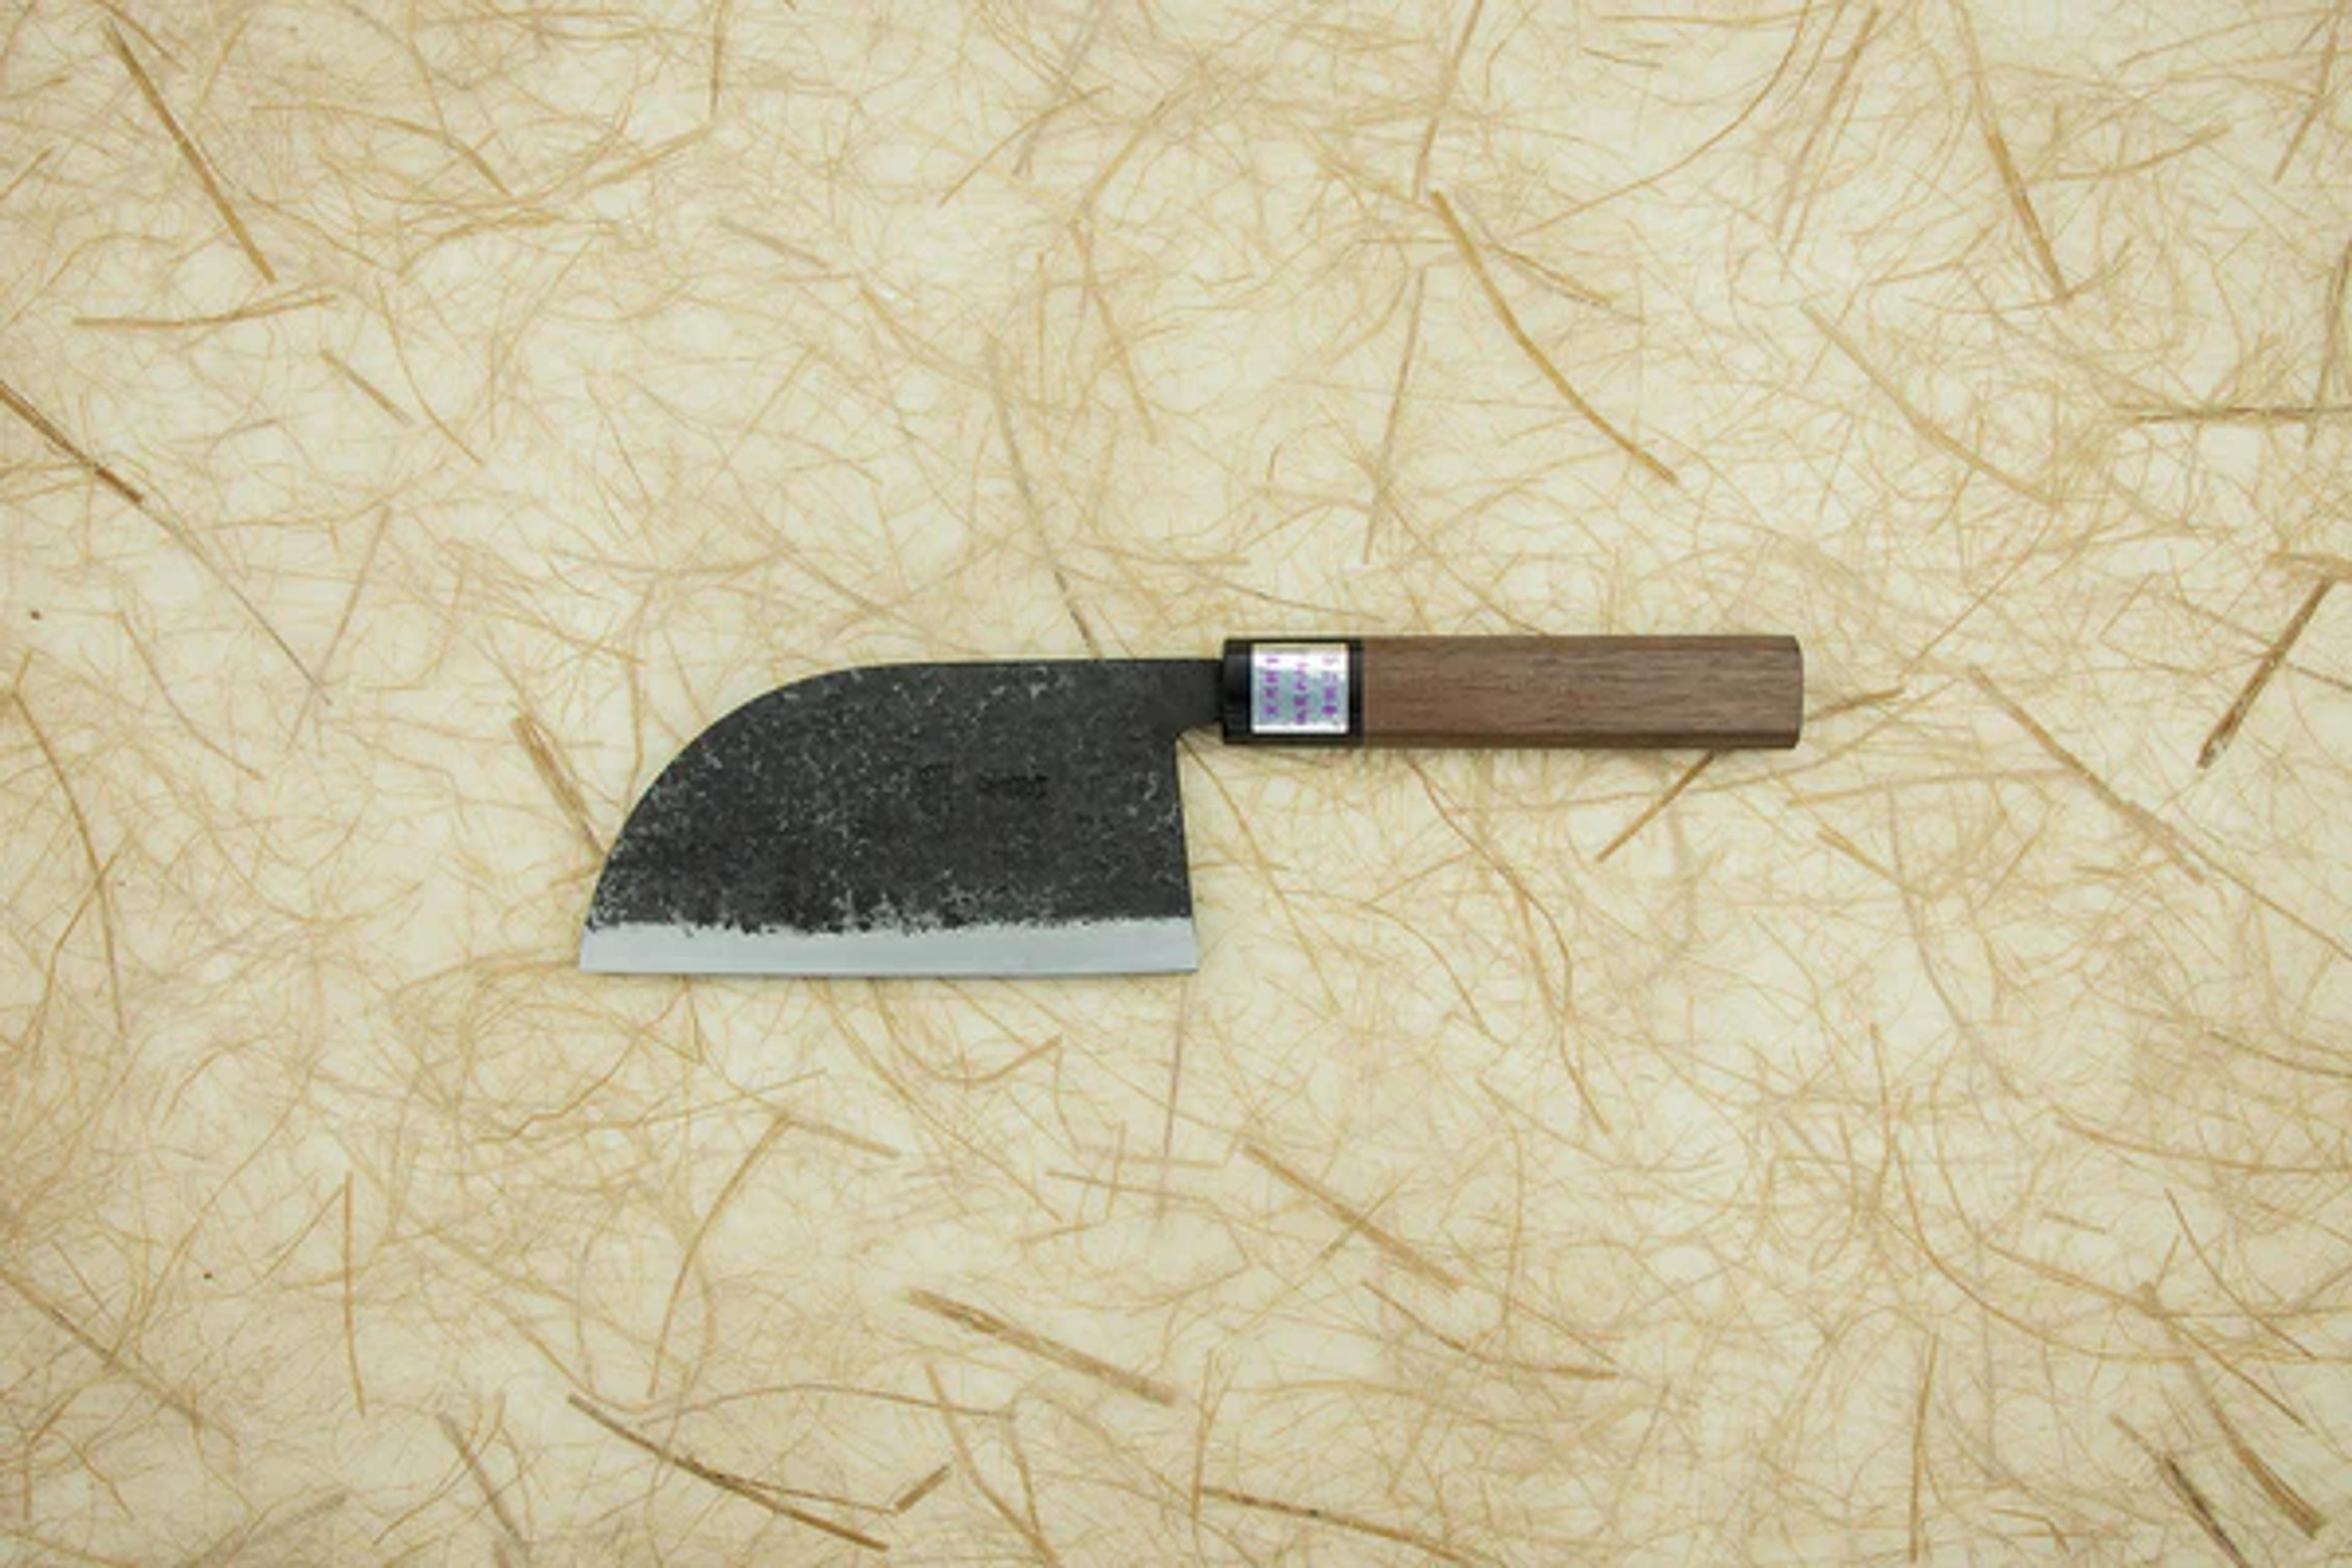 Moritaka Ishime Kamagata 130mm | Knifewear - Handcrafted Japanese Kitchen Knives